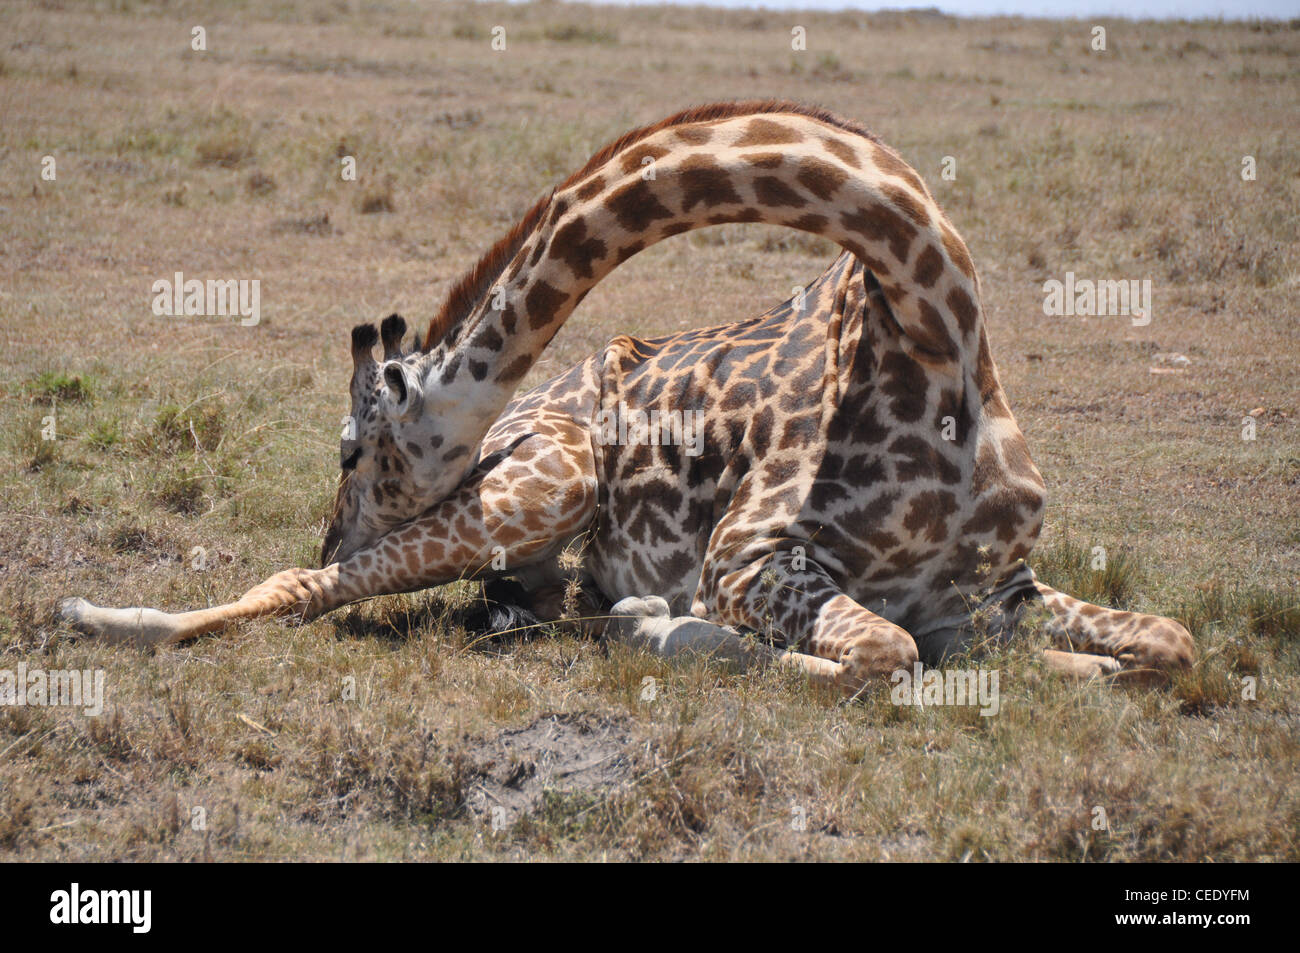 Giraffe scratching on the ground Stock Photo